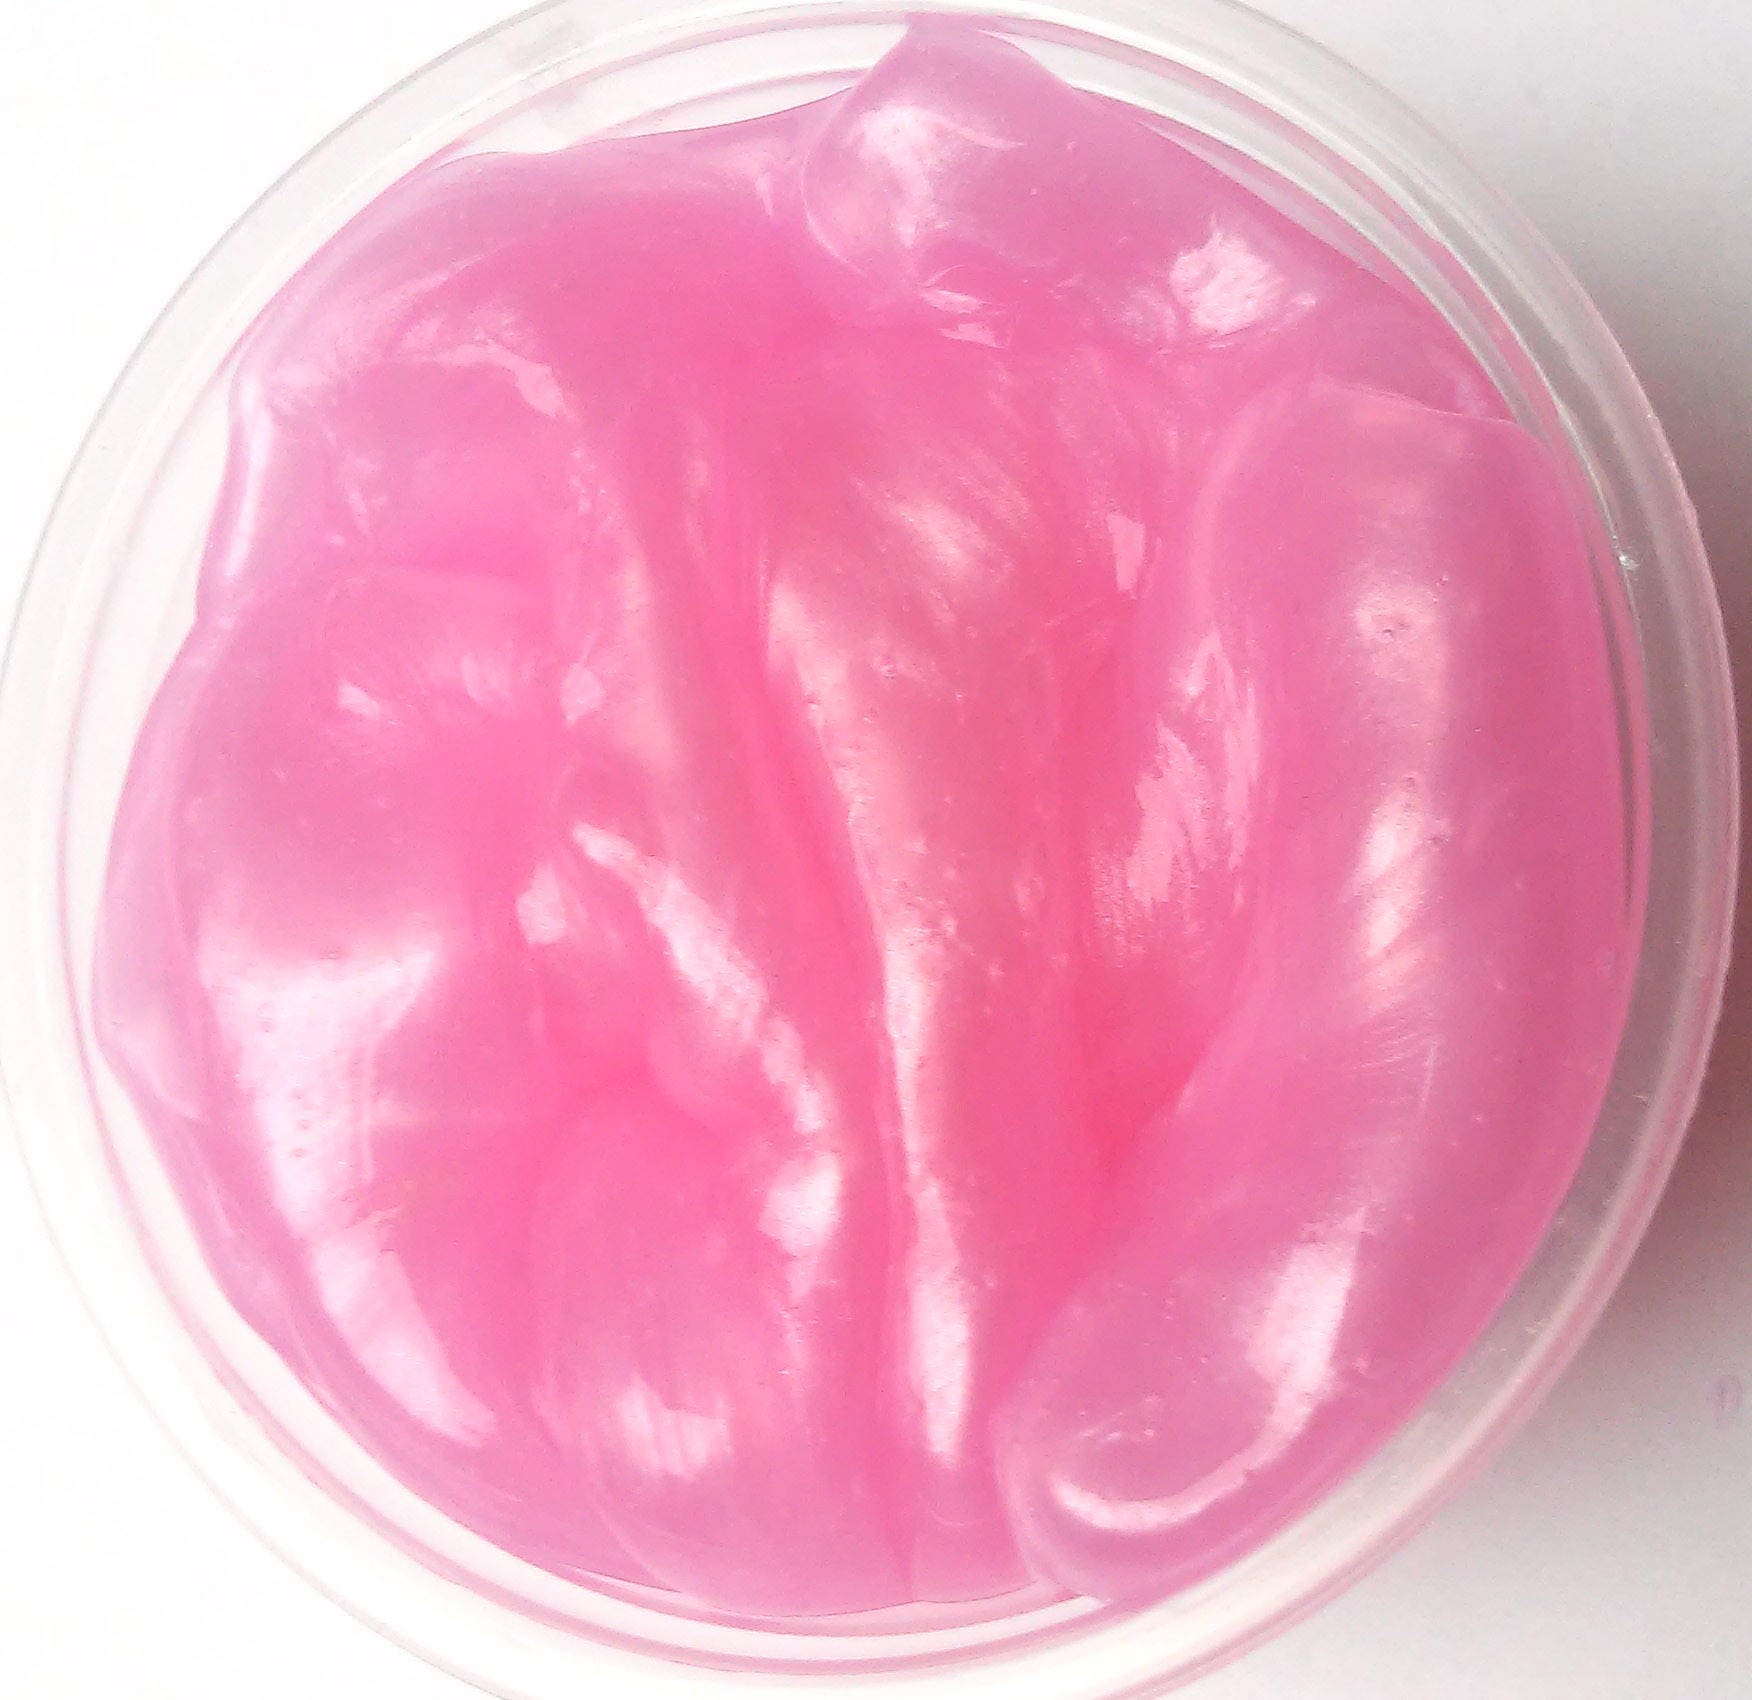 SLIMY Slime Color - 112gr Display Méga rose - 36004 à prix pas cher